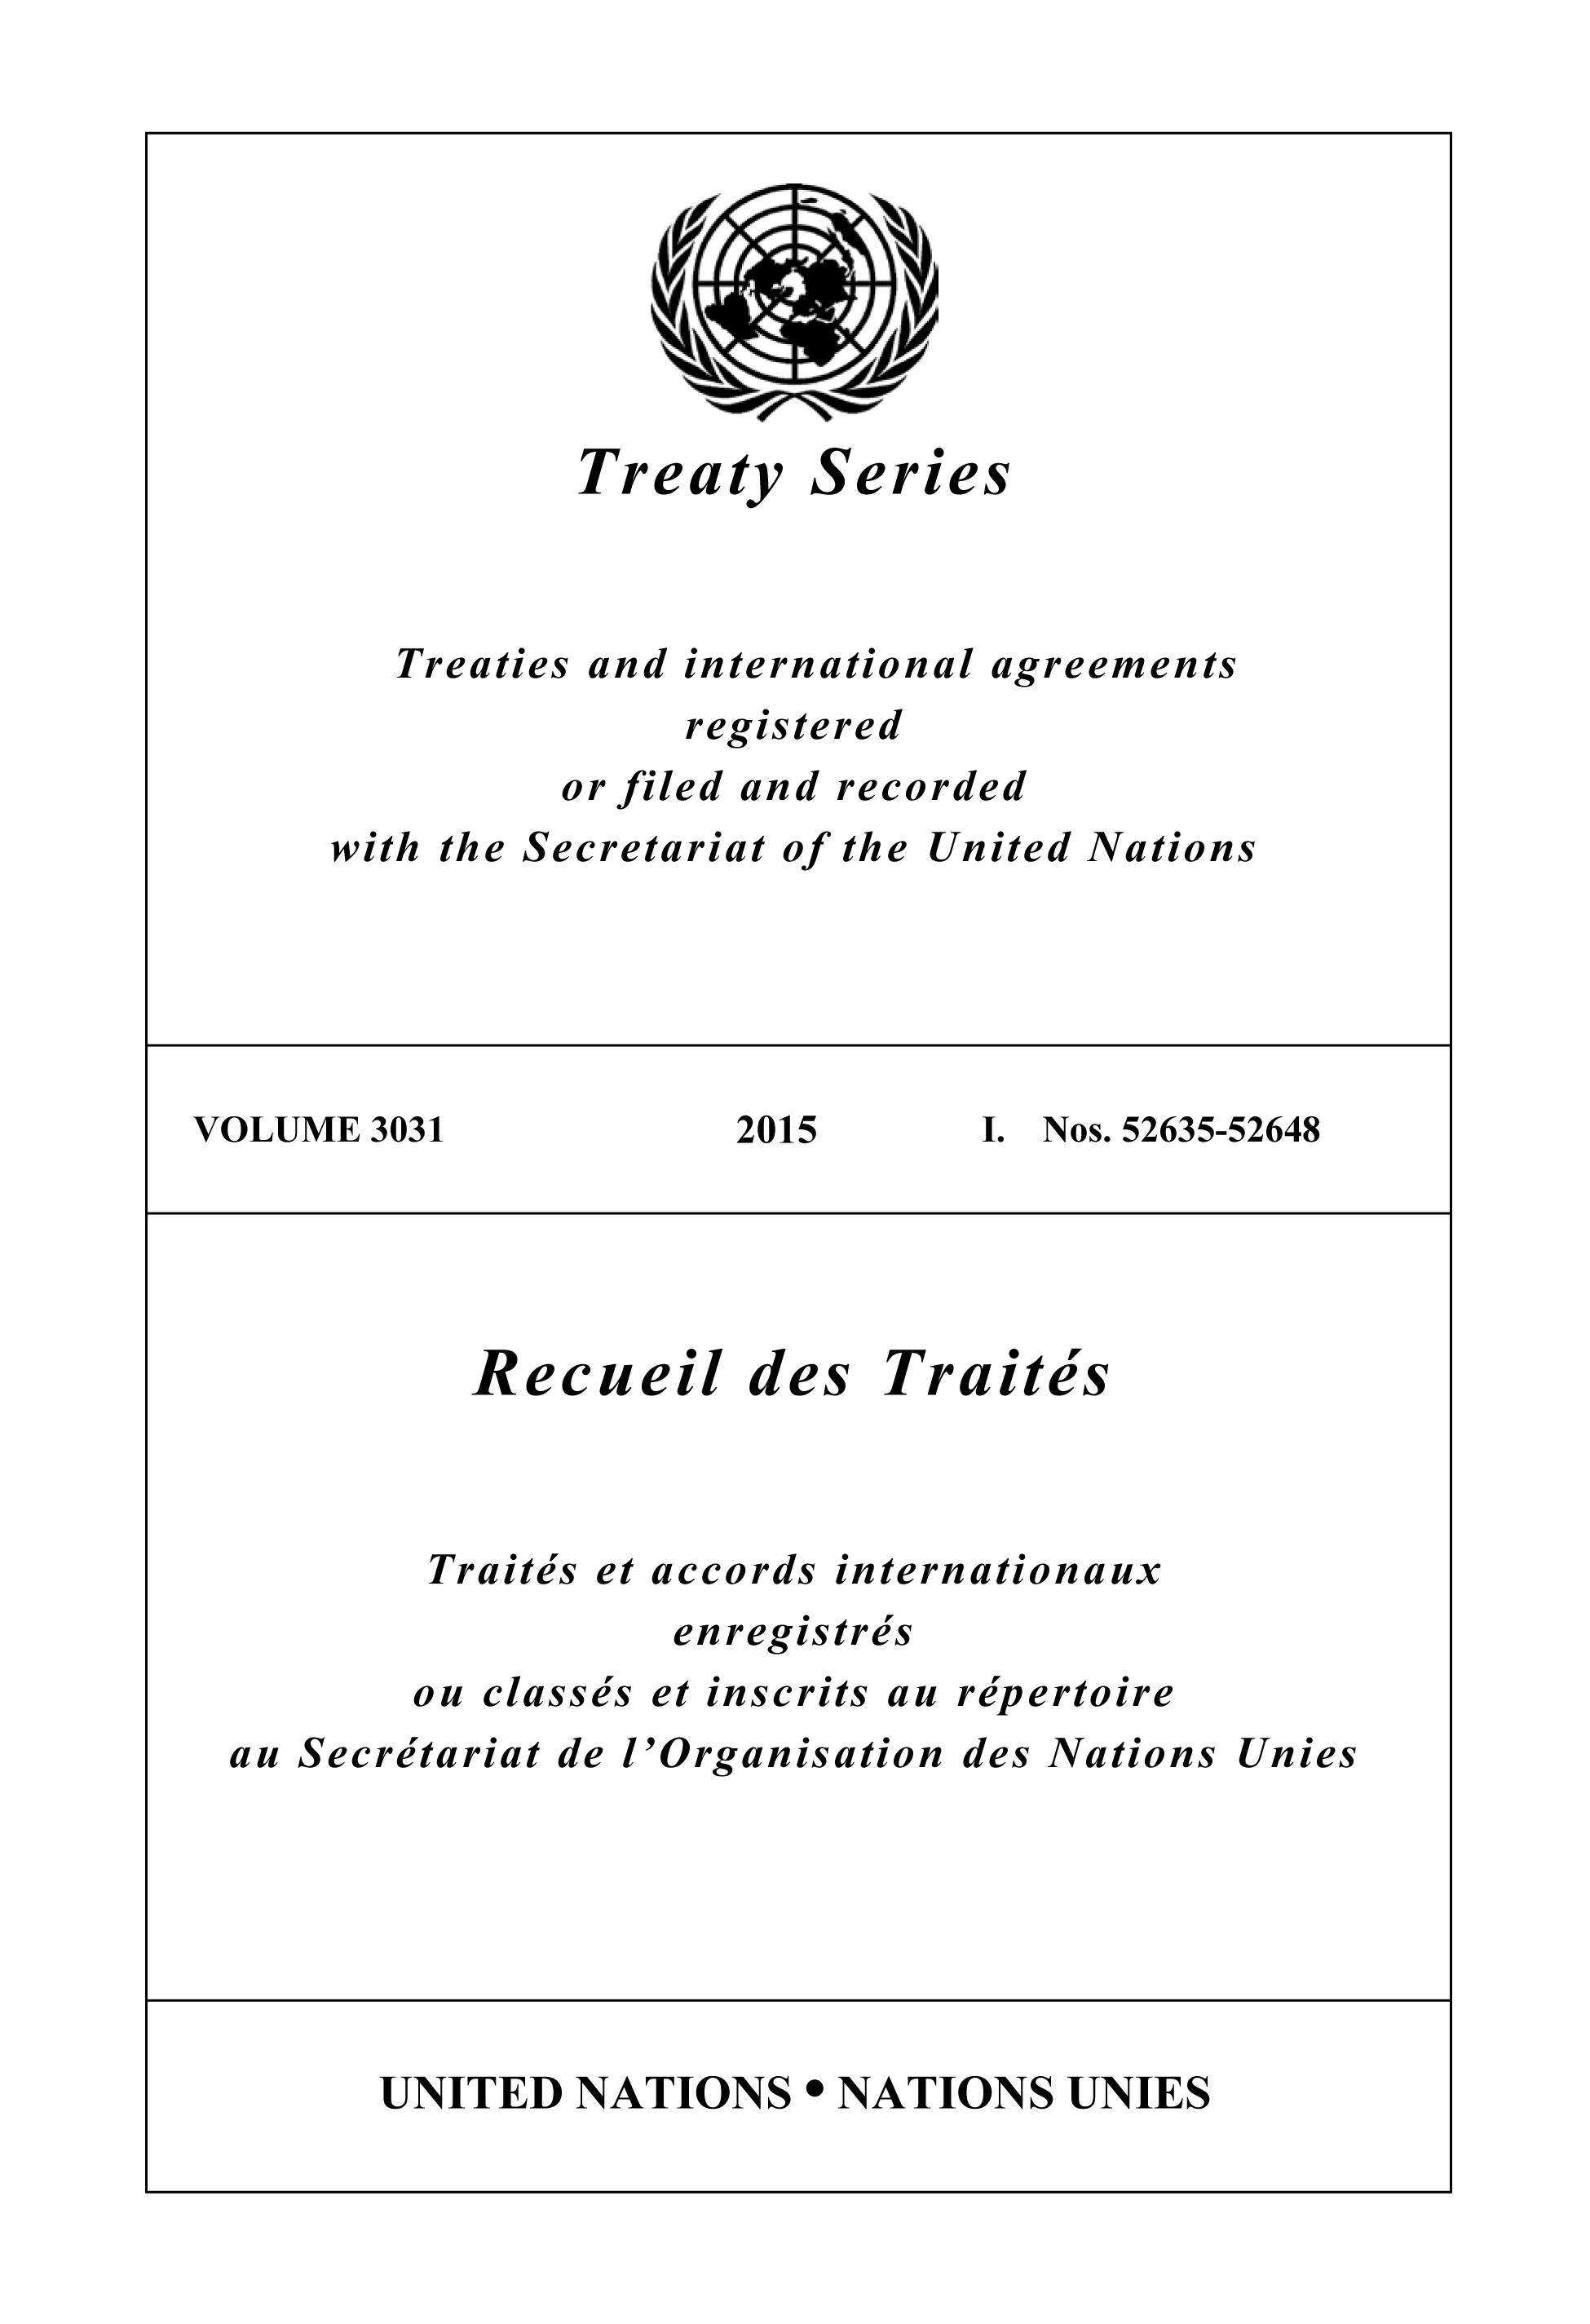 image of Treaty Series 3031